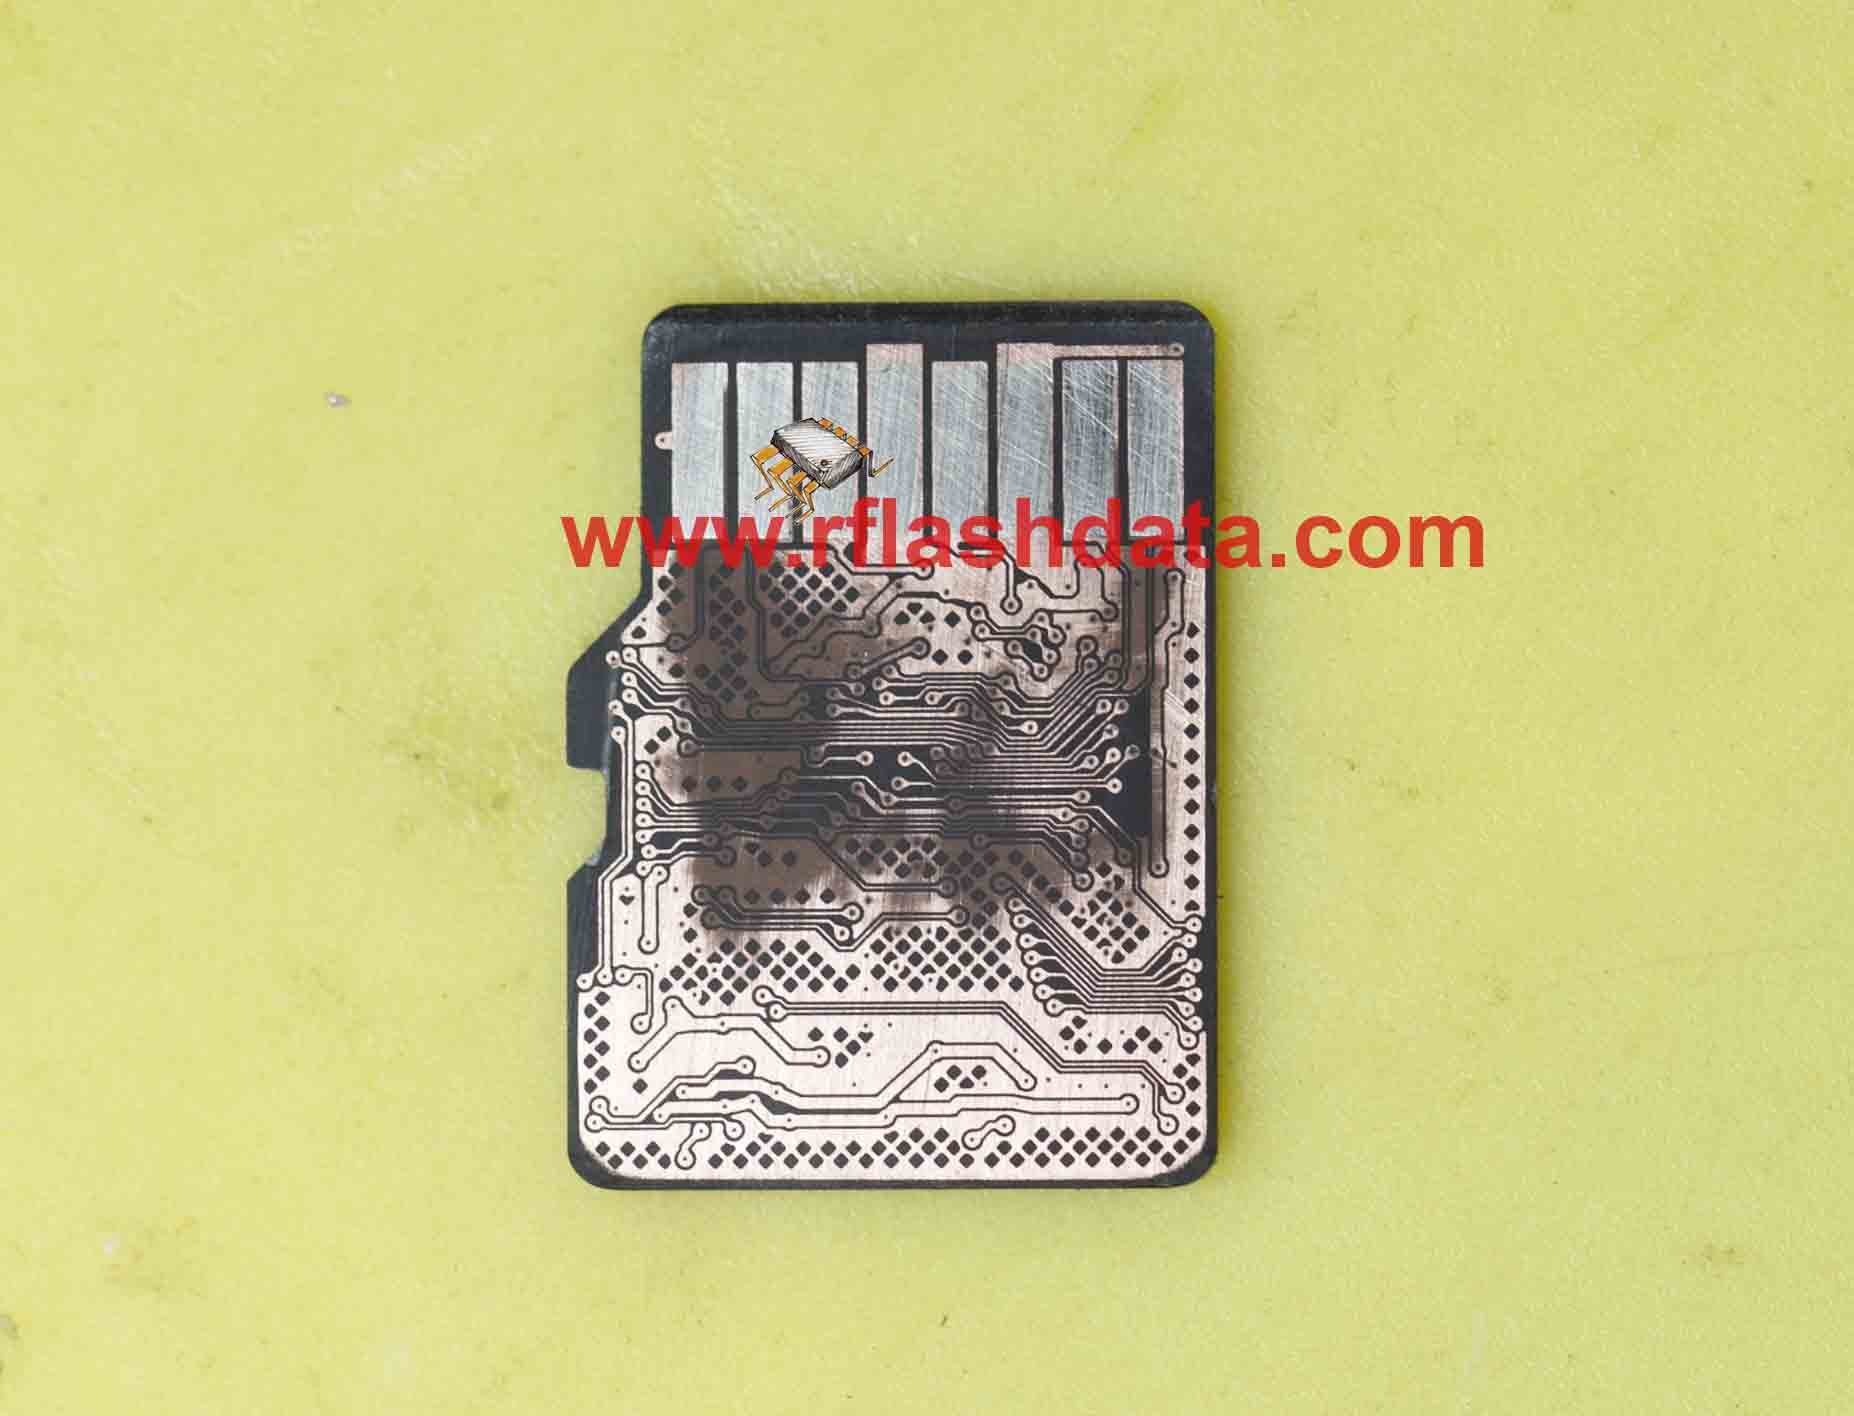 microSD card data recovery